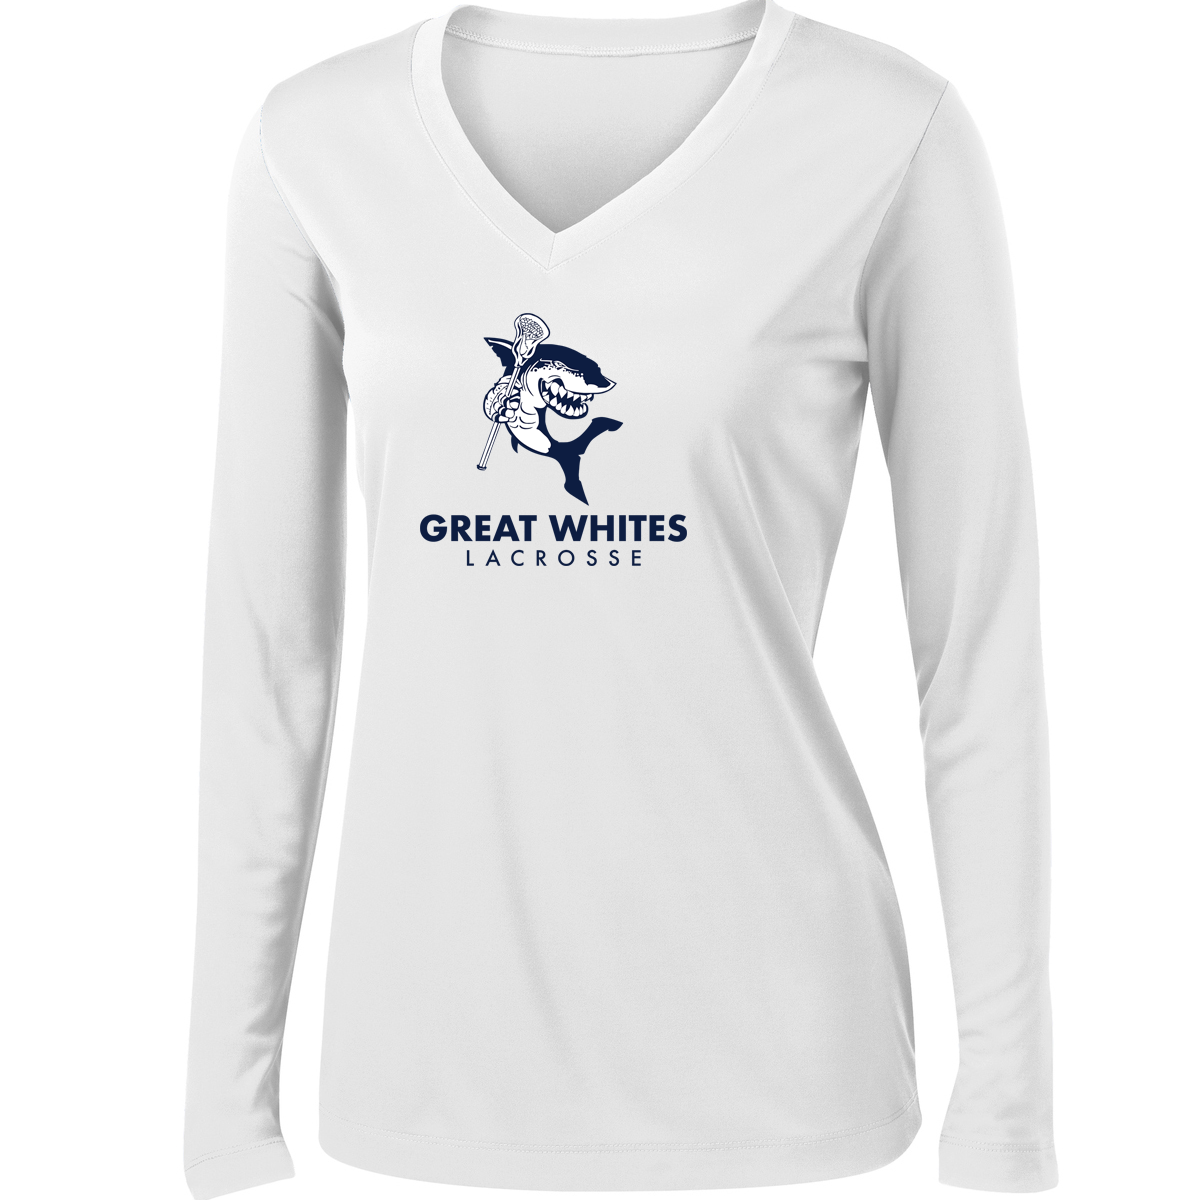 Great Whites Lacrosse Women's Long Sleeve Performance Shirt